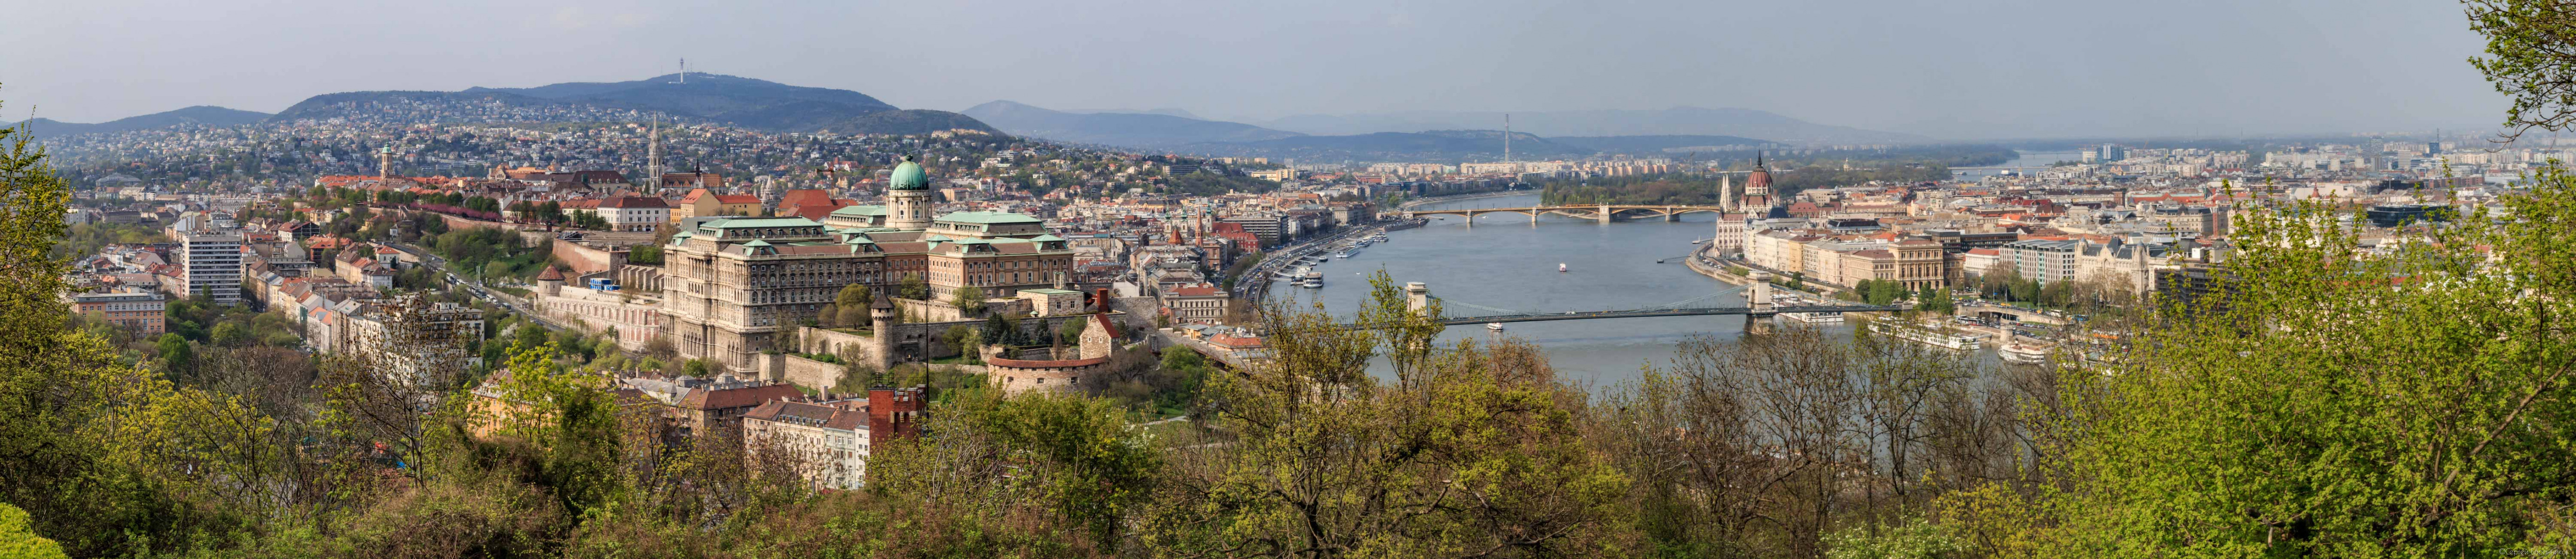 Панорама Будапешта. | Фотограф Сергей Баранников | foto.by фото.бай